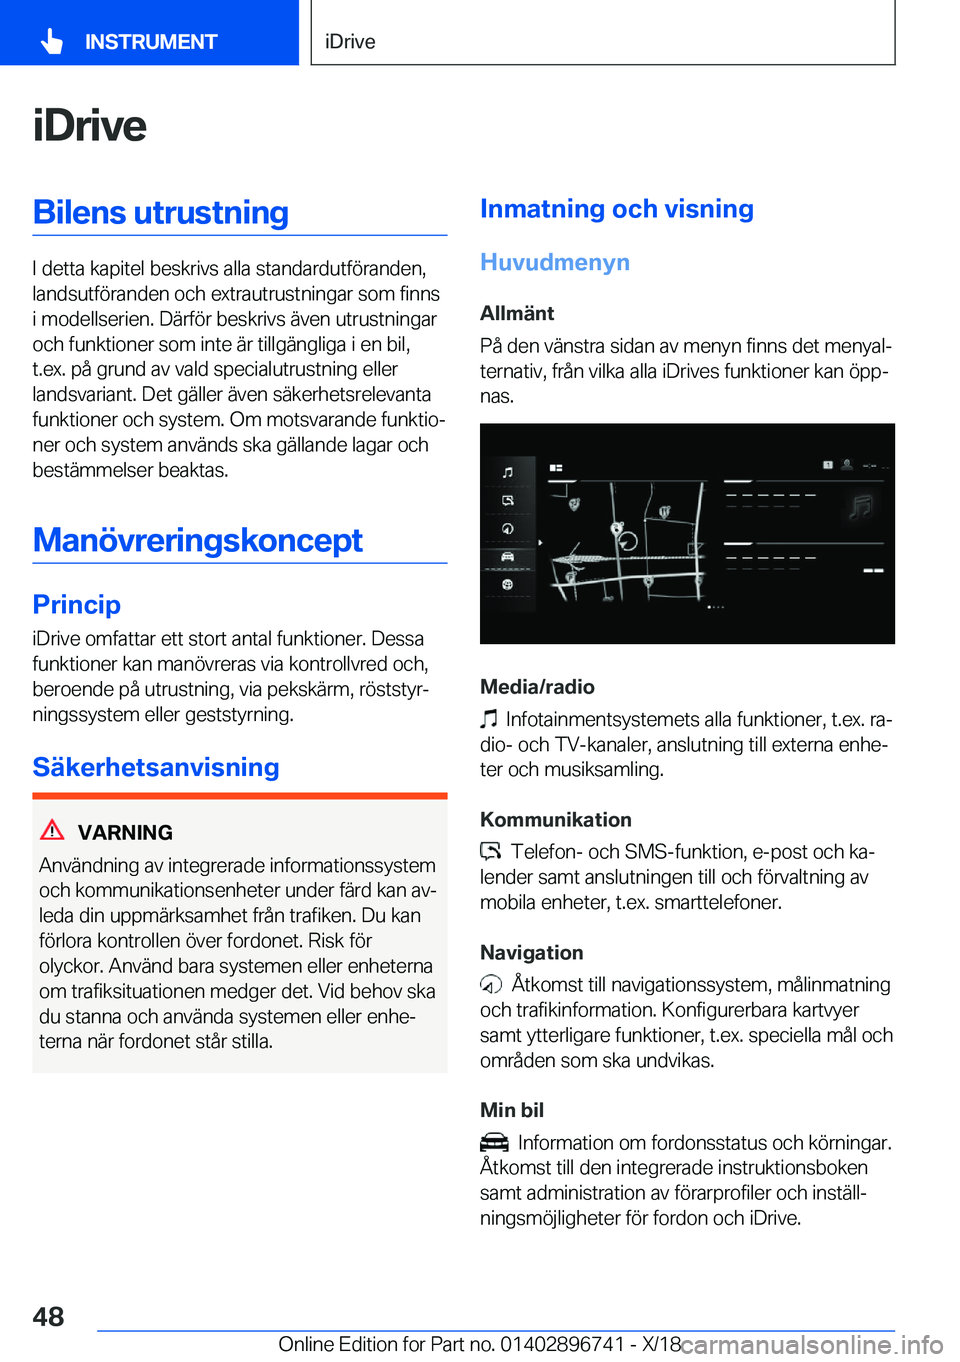 BMW X5 2019  InstruktionsbÖcker (in Swedish) �i�D�r�i�v�e�B�i�l�e�n�s��u�t�r�u�s�t�n�i�n�g
�I��d�e�t�t�a��k�a�p�i�t�e�l��b�e�s�k�r�i�v�s��a�l�l�a��s�t�a�n�d�a�r�d�u�t�f�